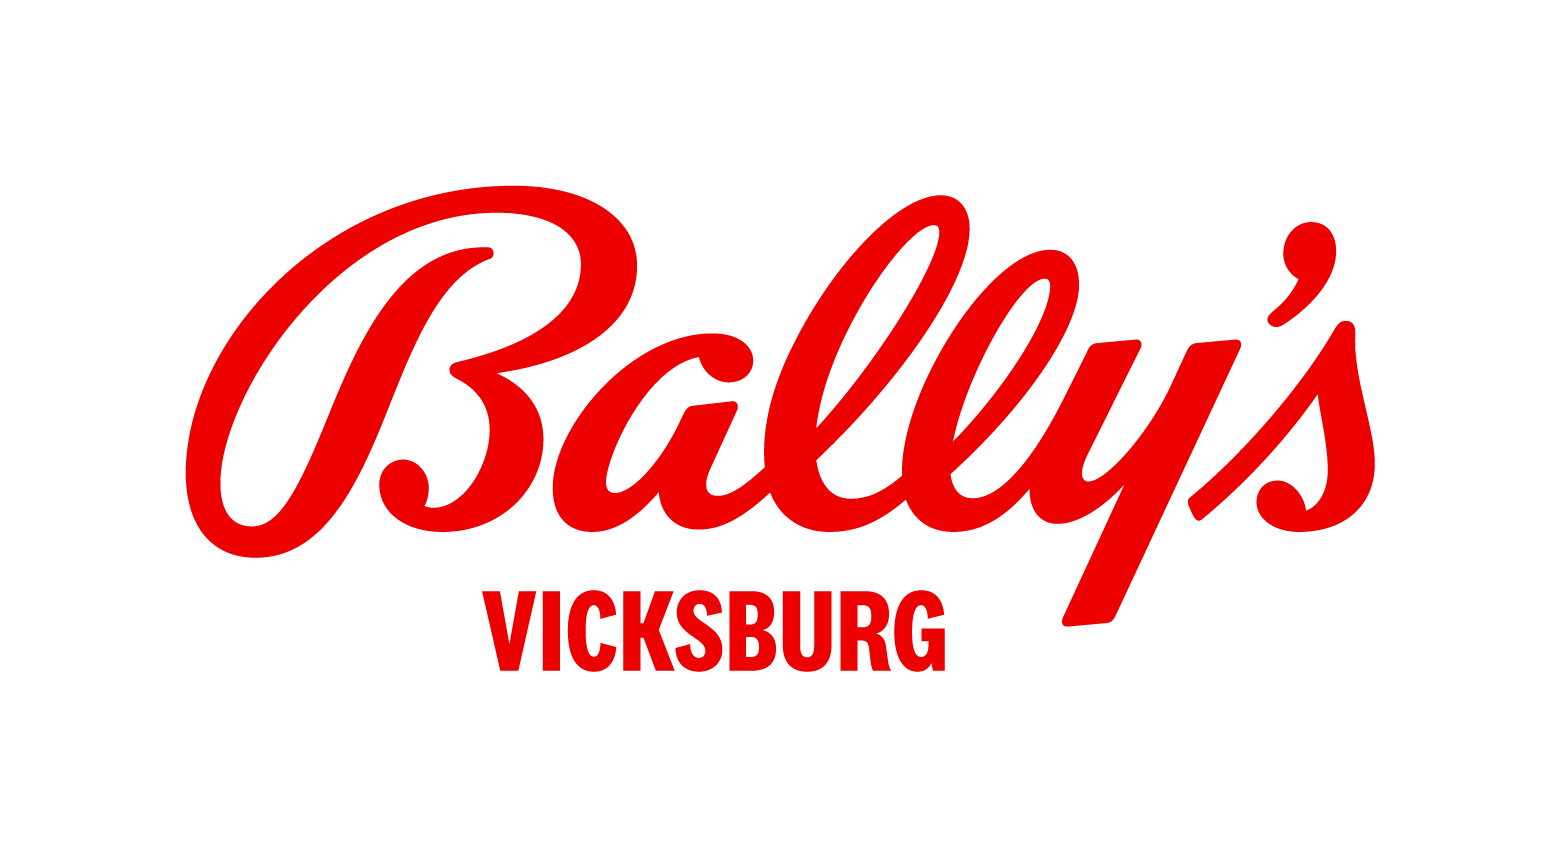 bally's vicksburg casino